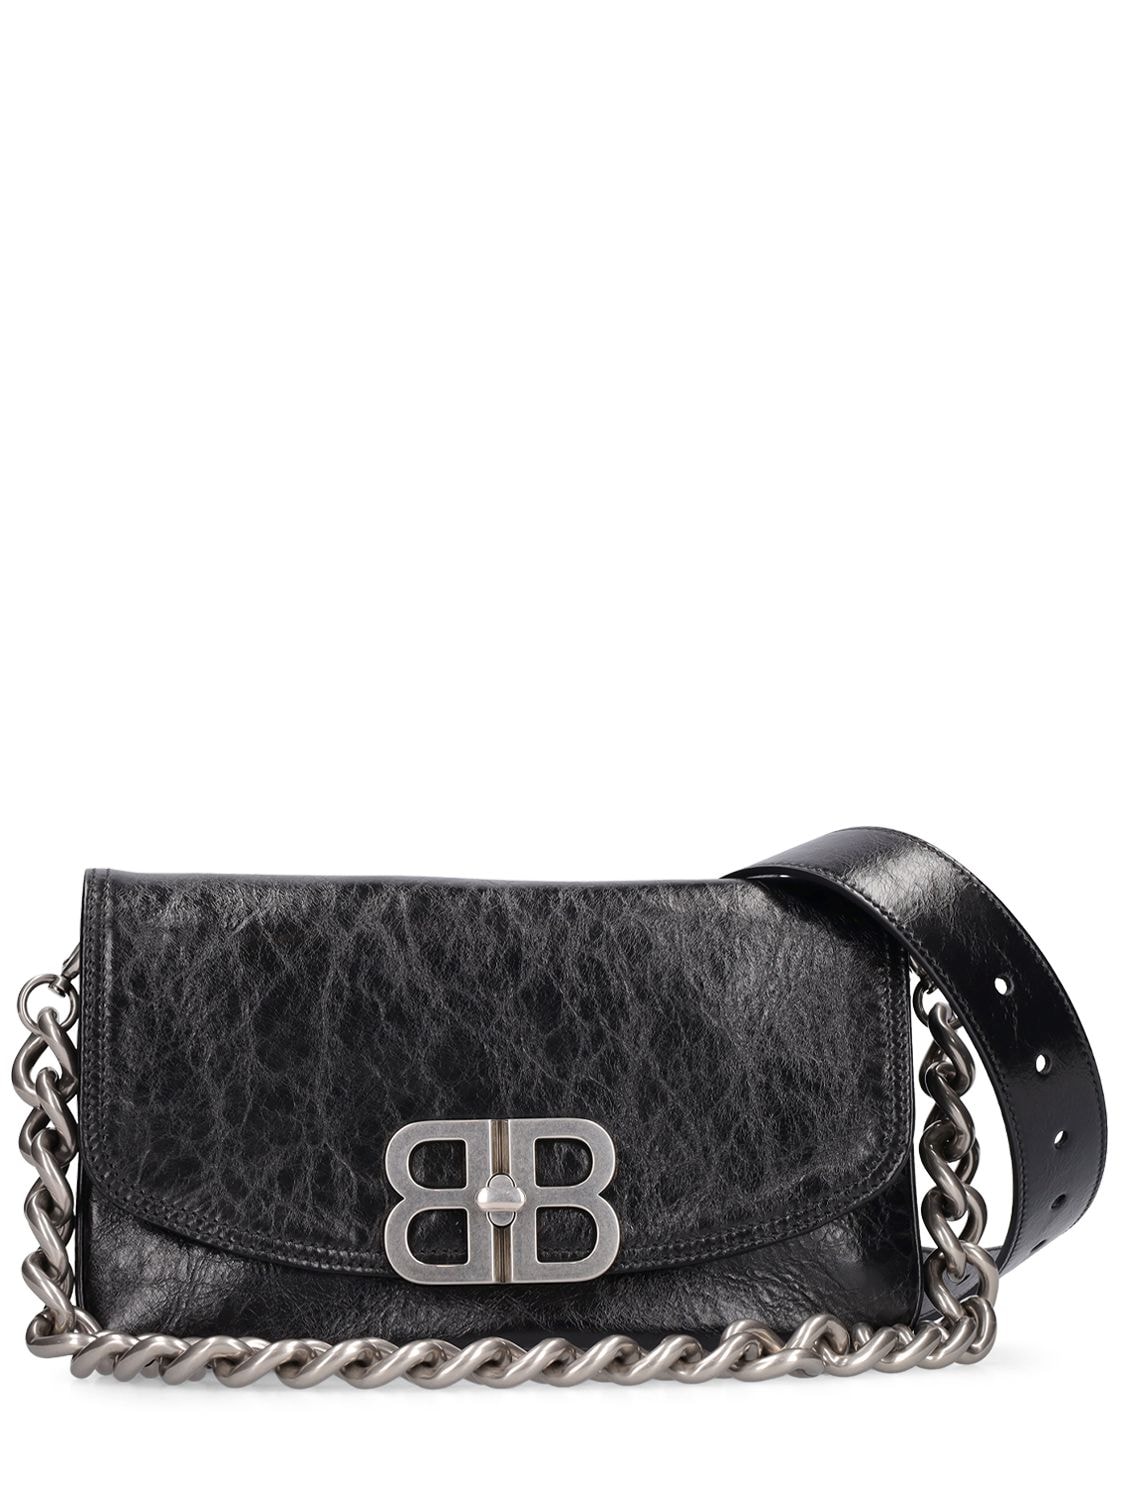 Balenciaga Small Bb Soft Leather Shoulder Bag In Black